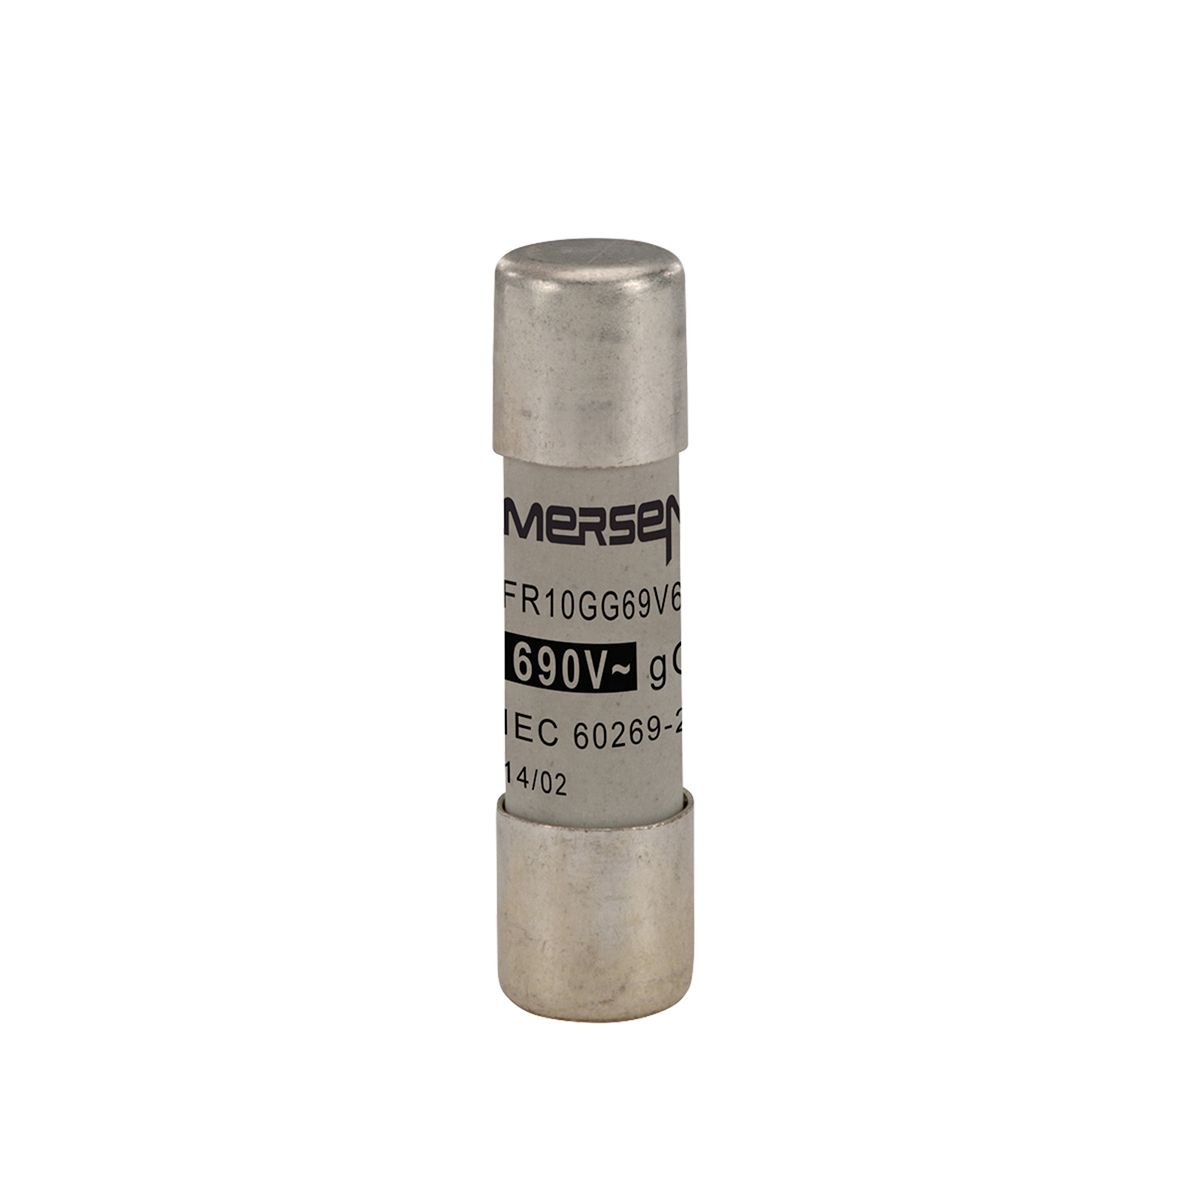 V302790 - Cylindrical fuse-link gG 690VAC 10.3x38, 6A